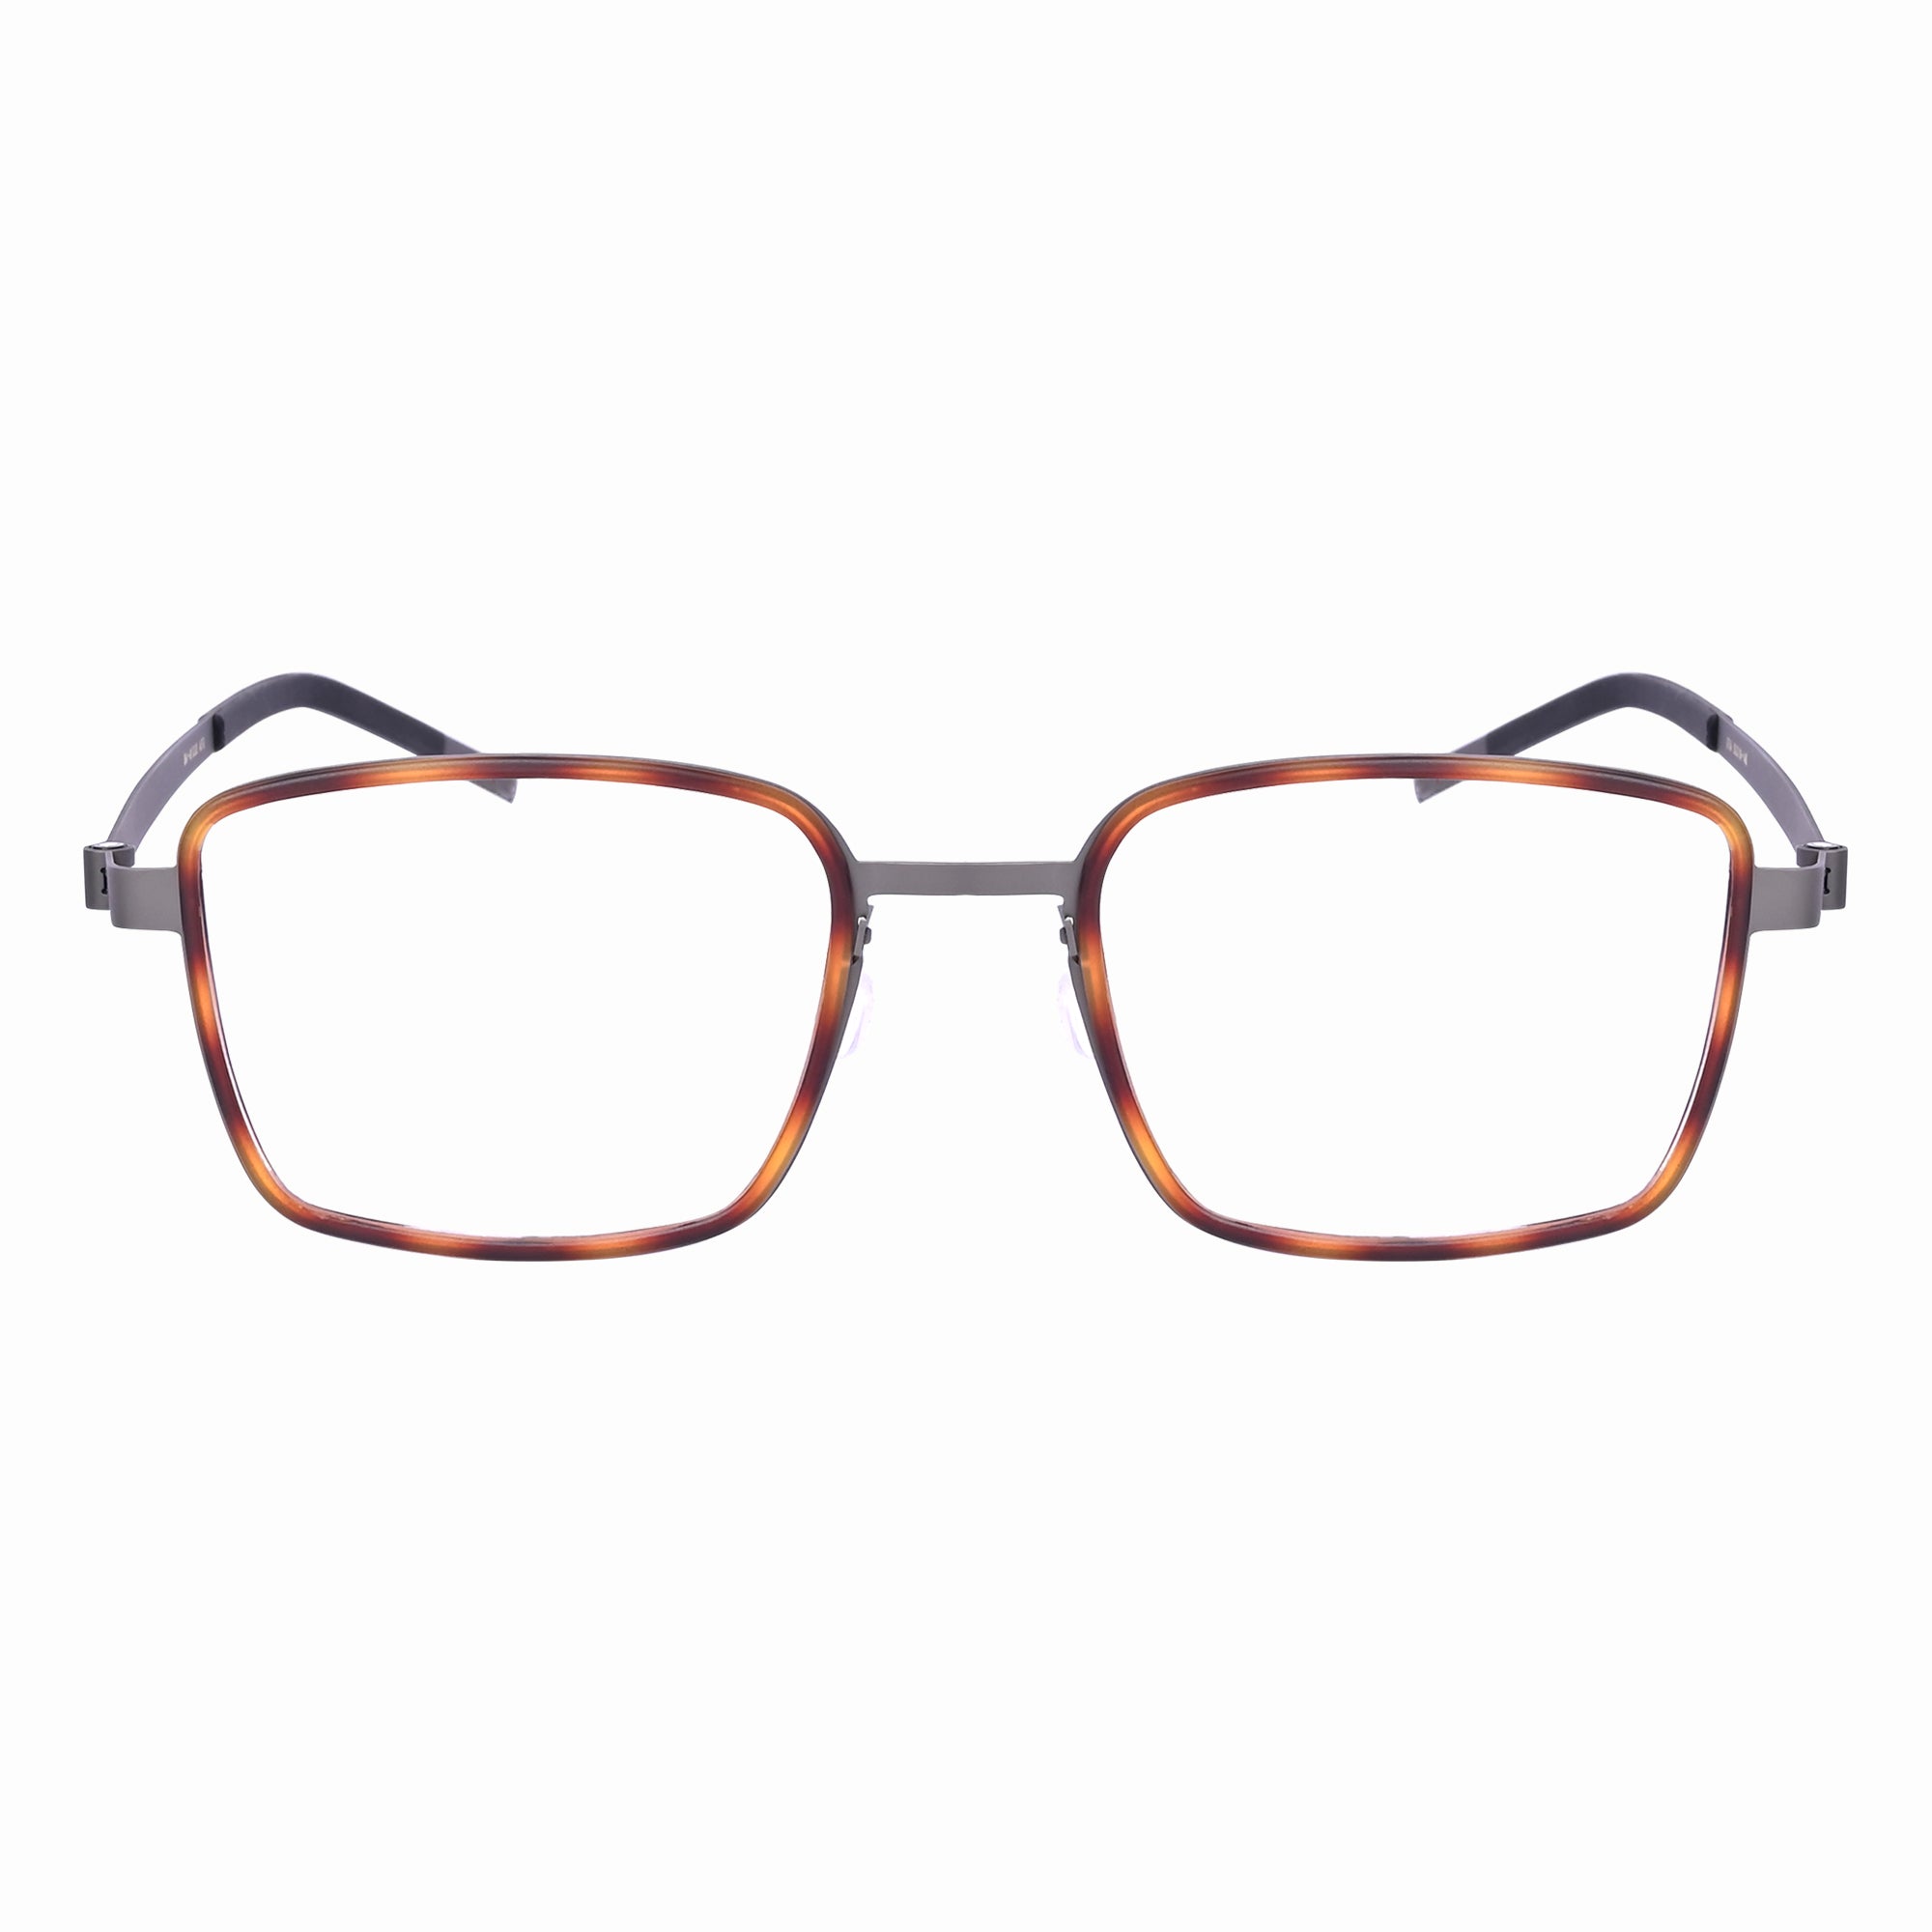 Grey Tortoise Computer Glasses - Titanium Eyeglasses - LG-001 GRTT